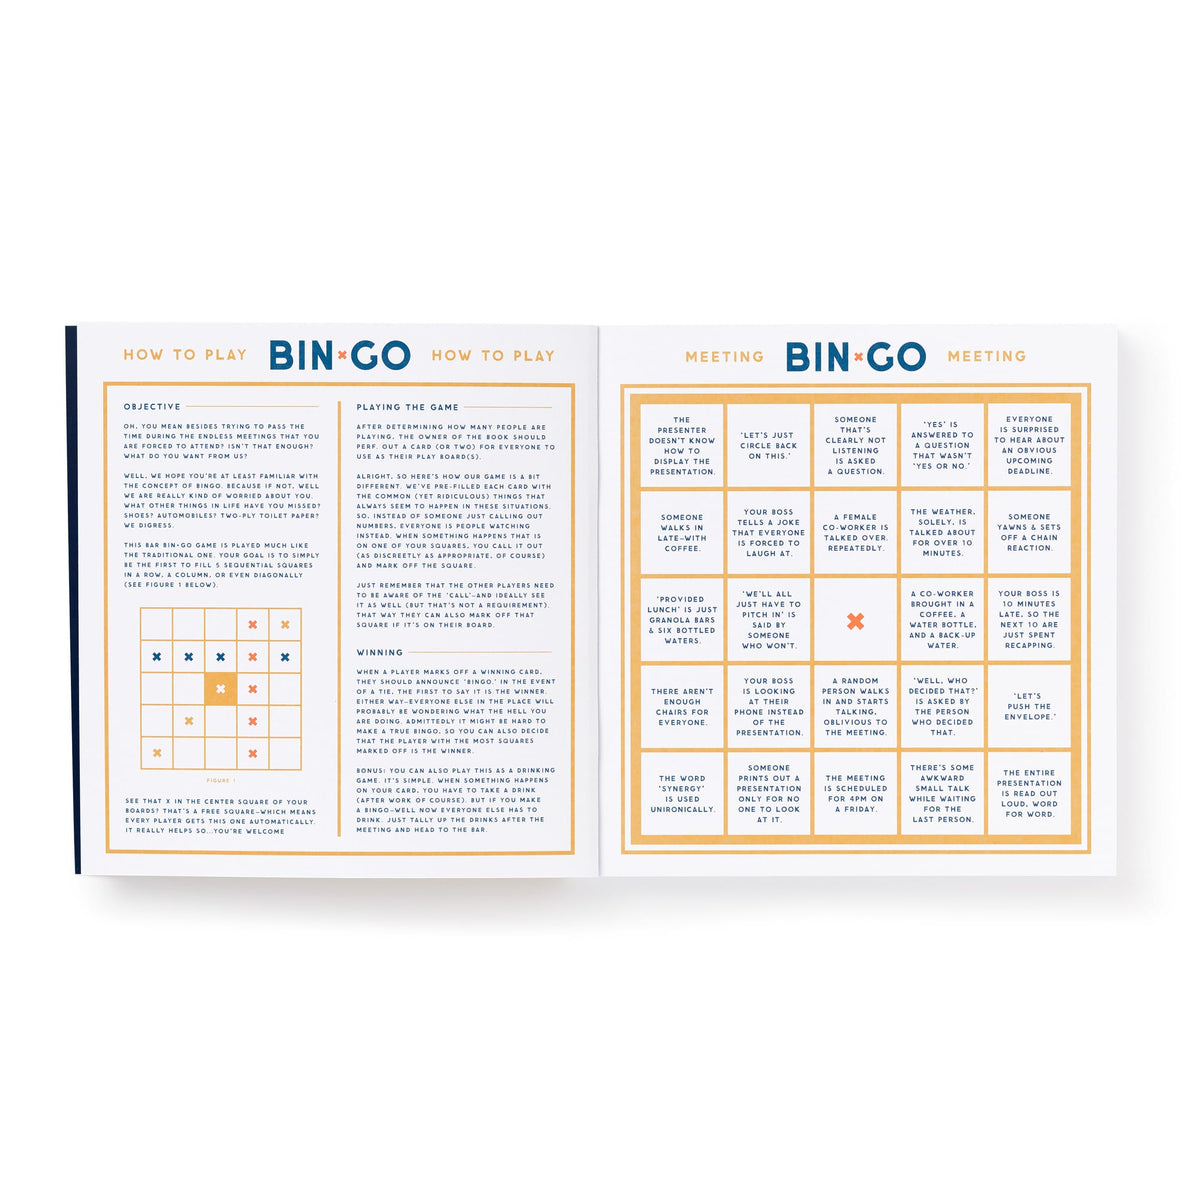 Bin-go To A Dumb Meeting Bingo Book - Brass Monkey - 9780735377080